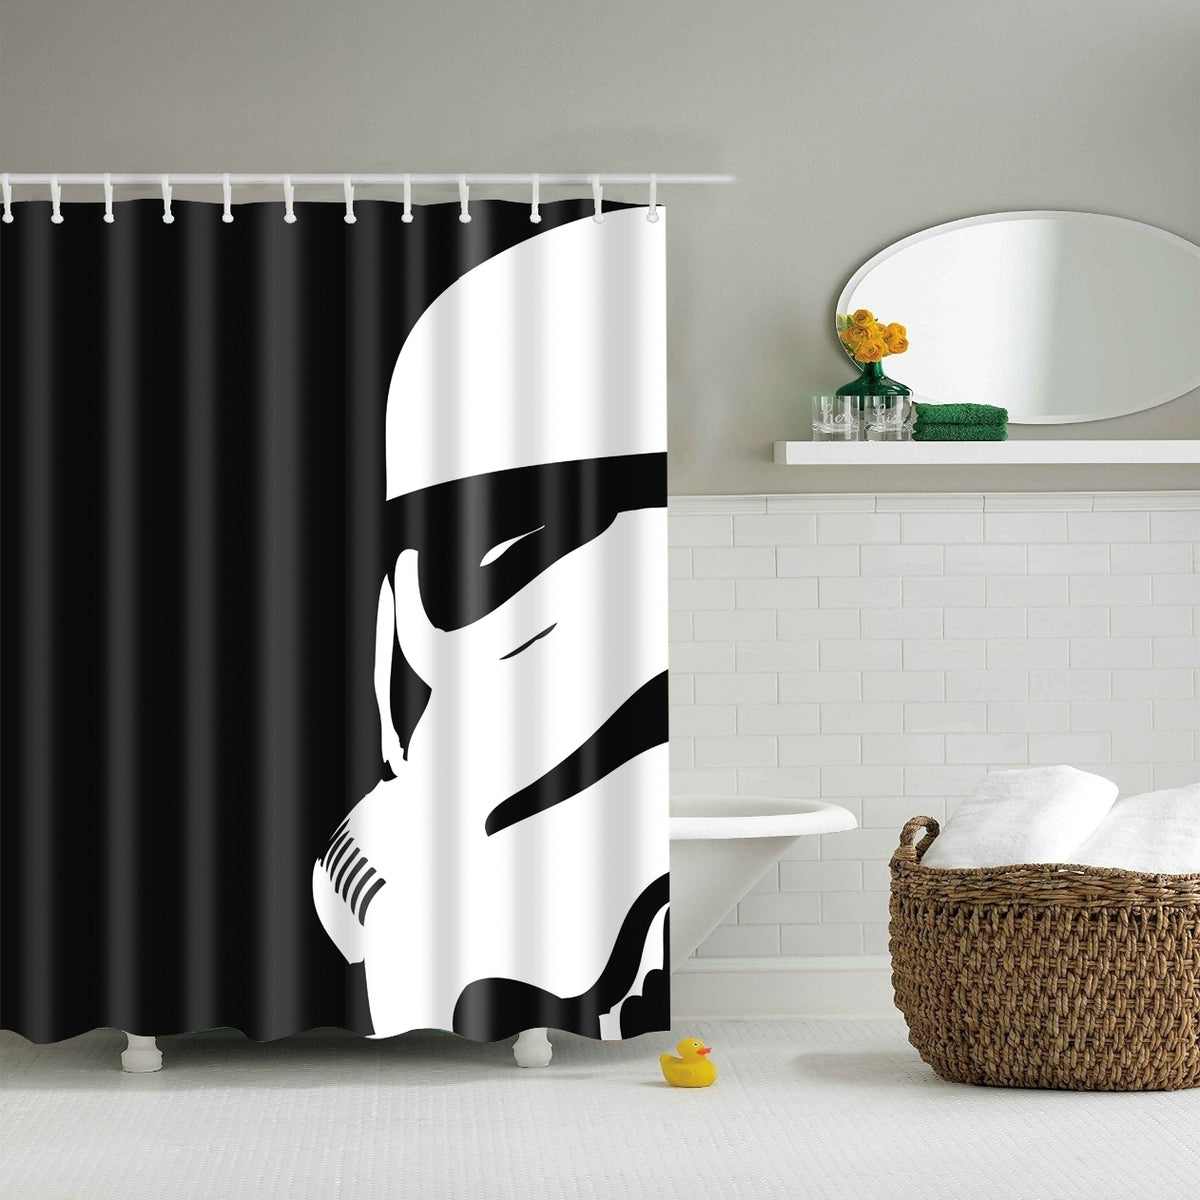 star wars shower curtain